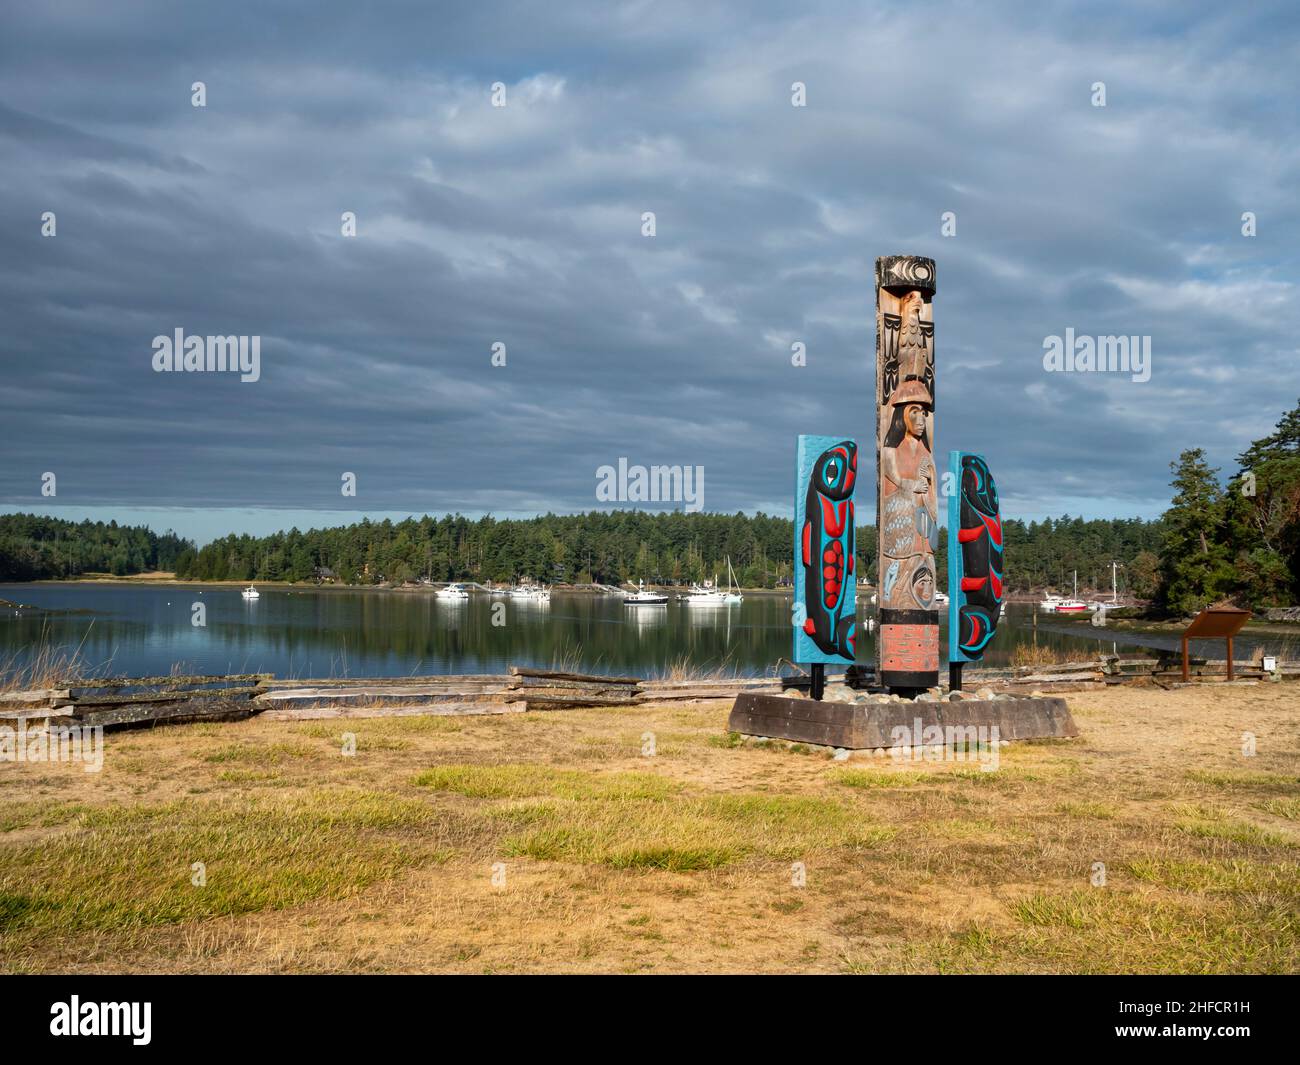 WA21126-00...WASHINGTON - Totem pole honoring the Coast Salish People at English Camp National Historical Park on San Juan Island. Stock Photo